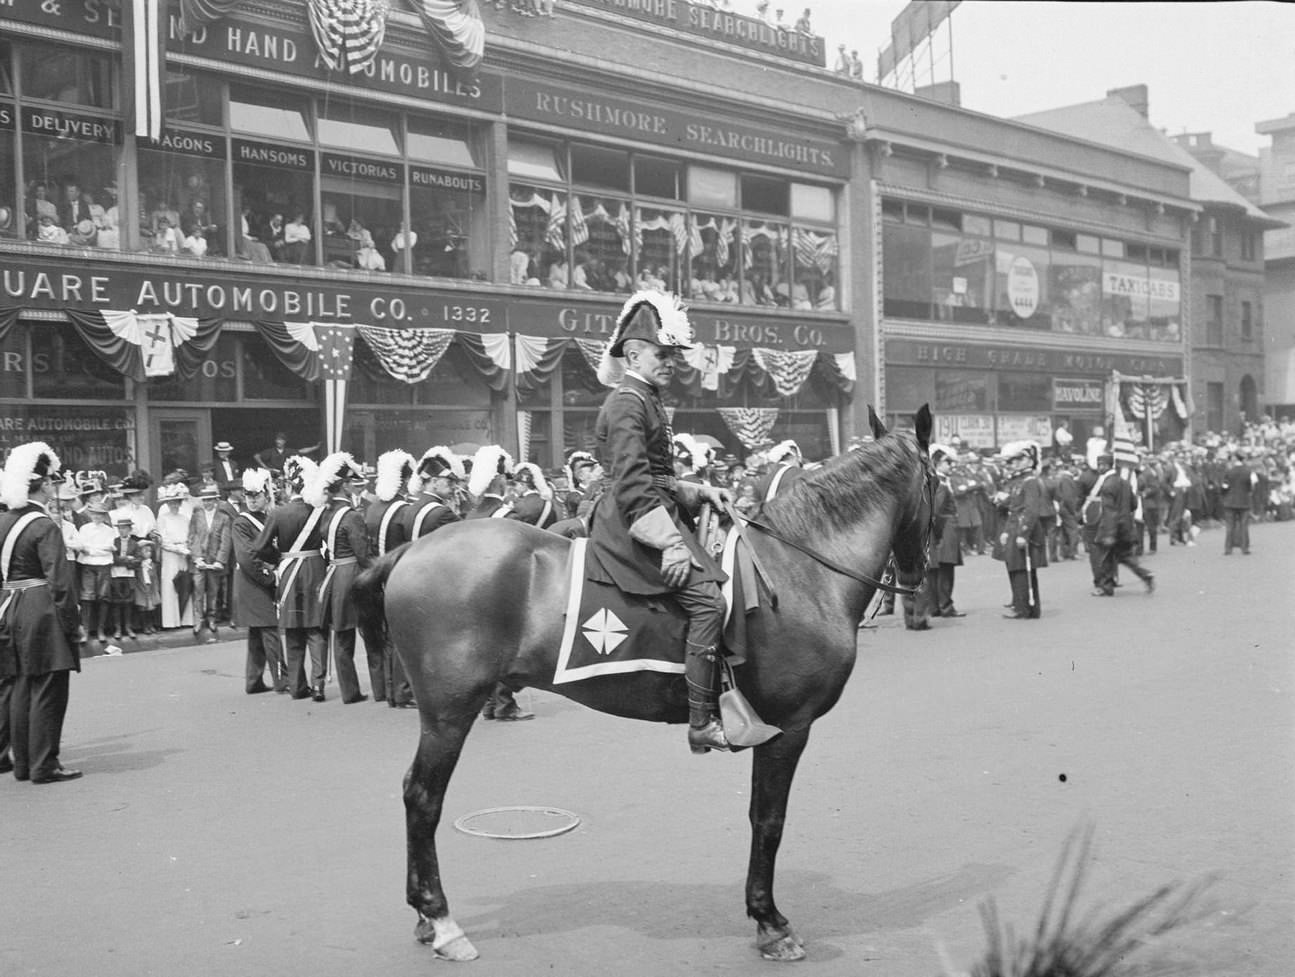 Knights Templar parade, Chicago, Illinois, August 9, 1910.